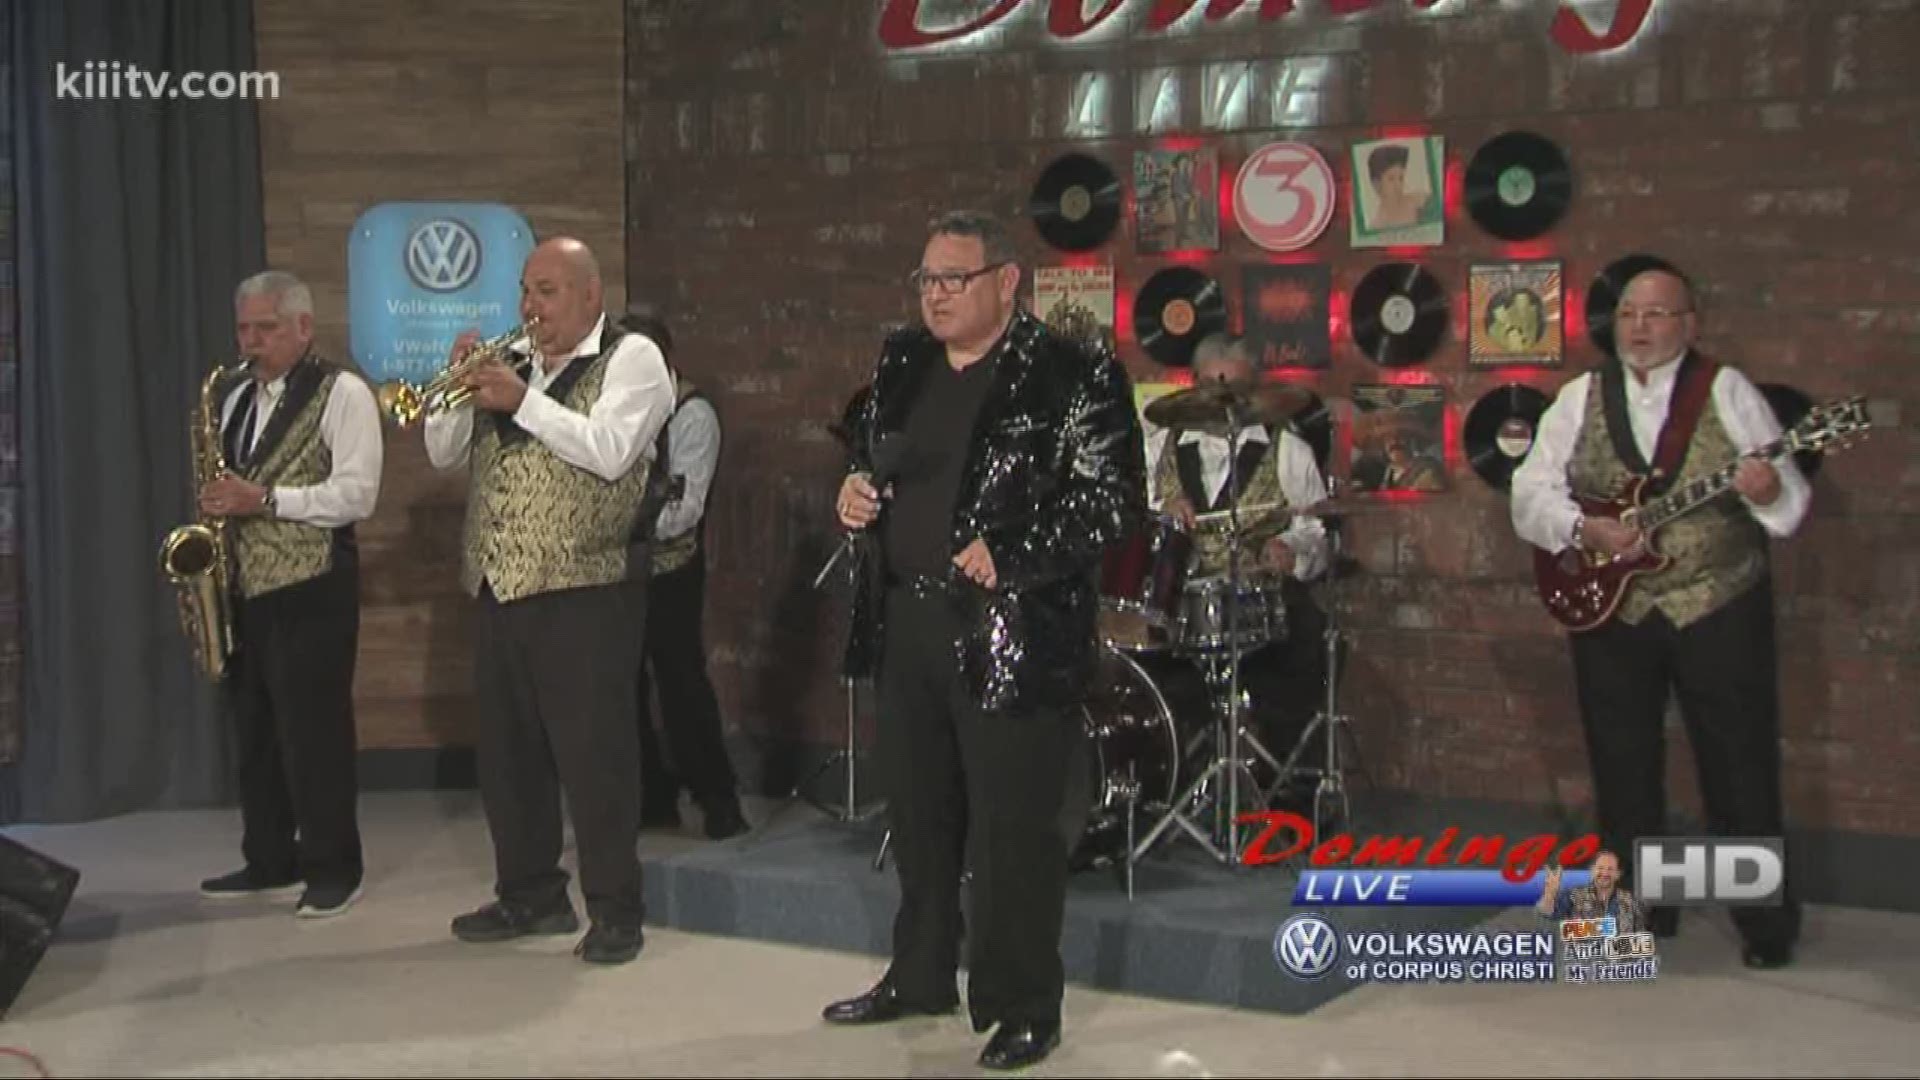 Michael B & The Fabulous Flames performing "Ensenia Me Querer" on Domingo Live.